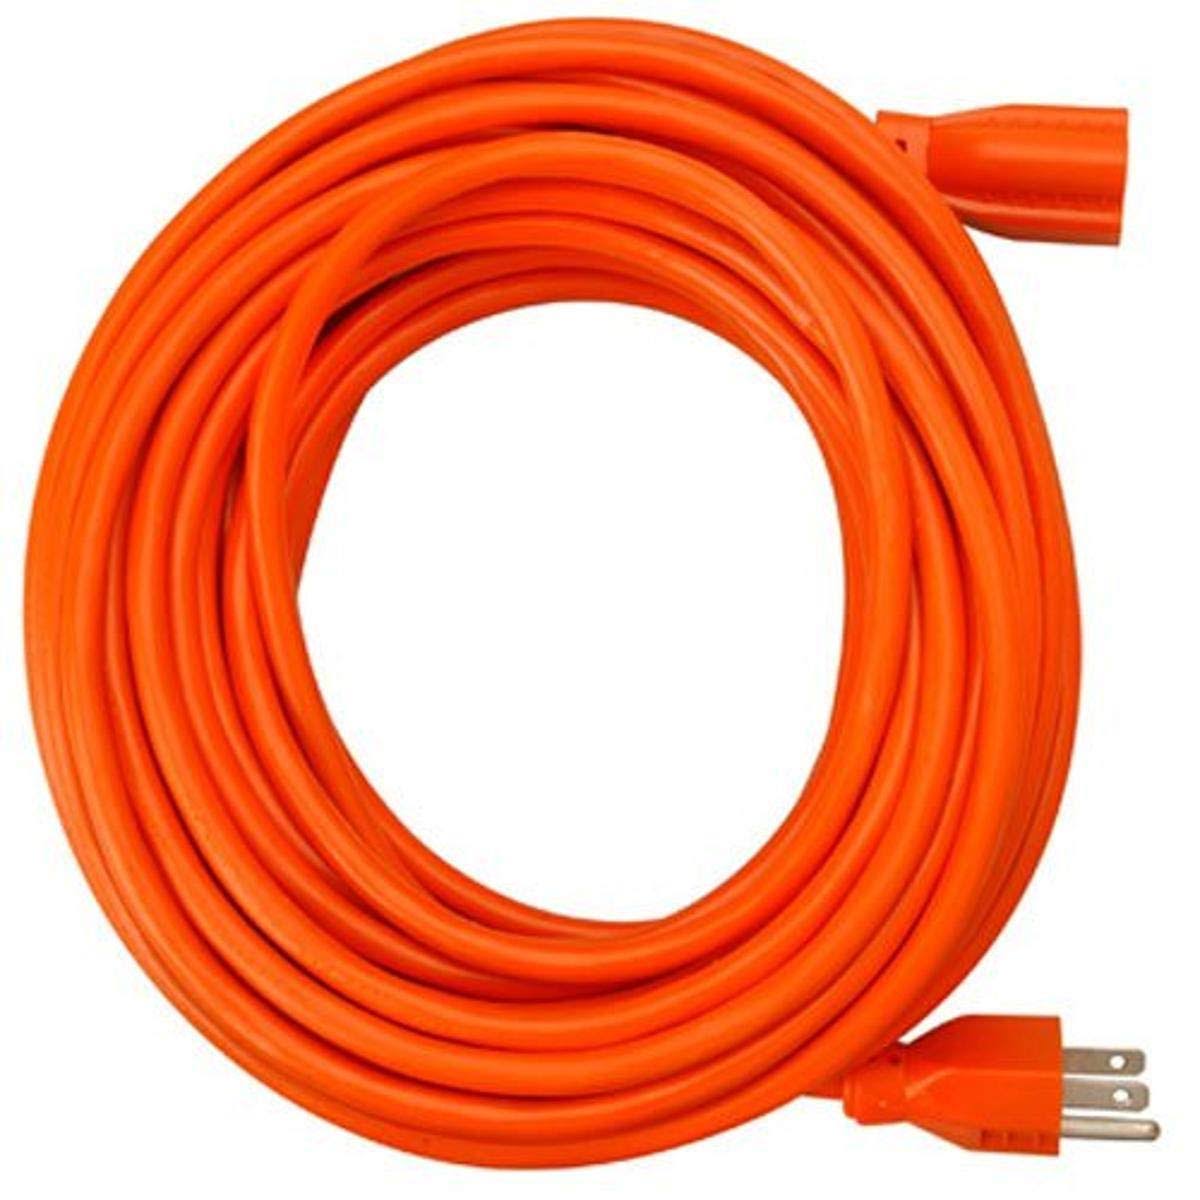 Master Electrician 25-Feet Round Vinyl Extension Cord - Orange